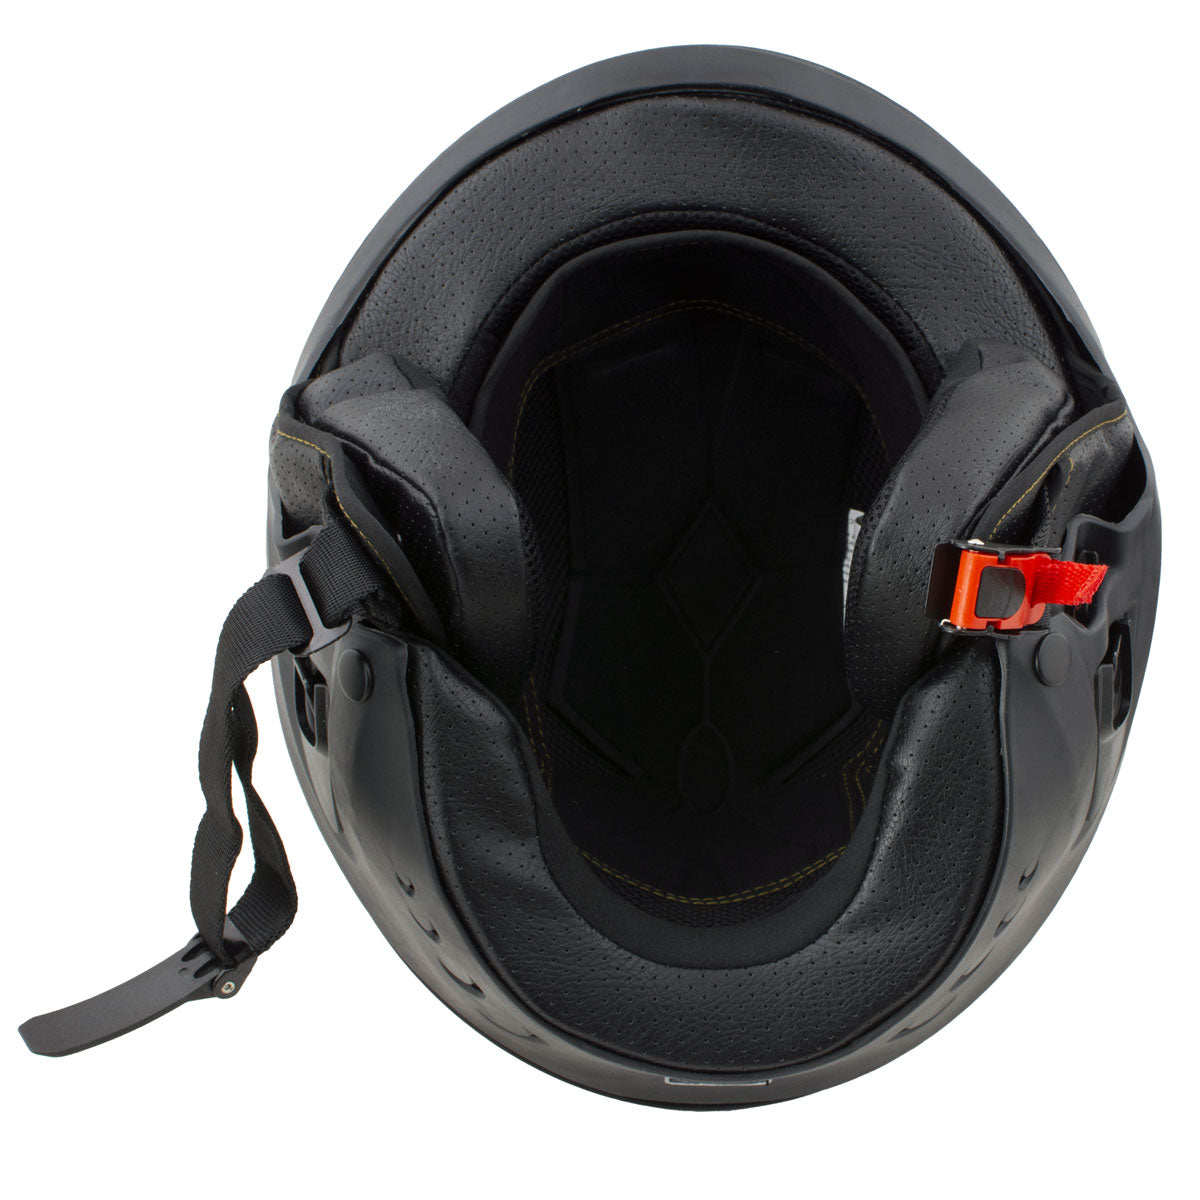 Milwaukee Helmets MPH9830DOT 'Rascal' 3/4 Open Face Flat Black 2 in 1 Motorcycle Helmet for Men and Women Biker